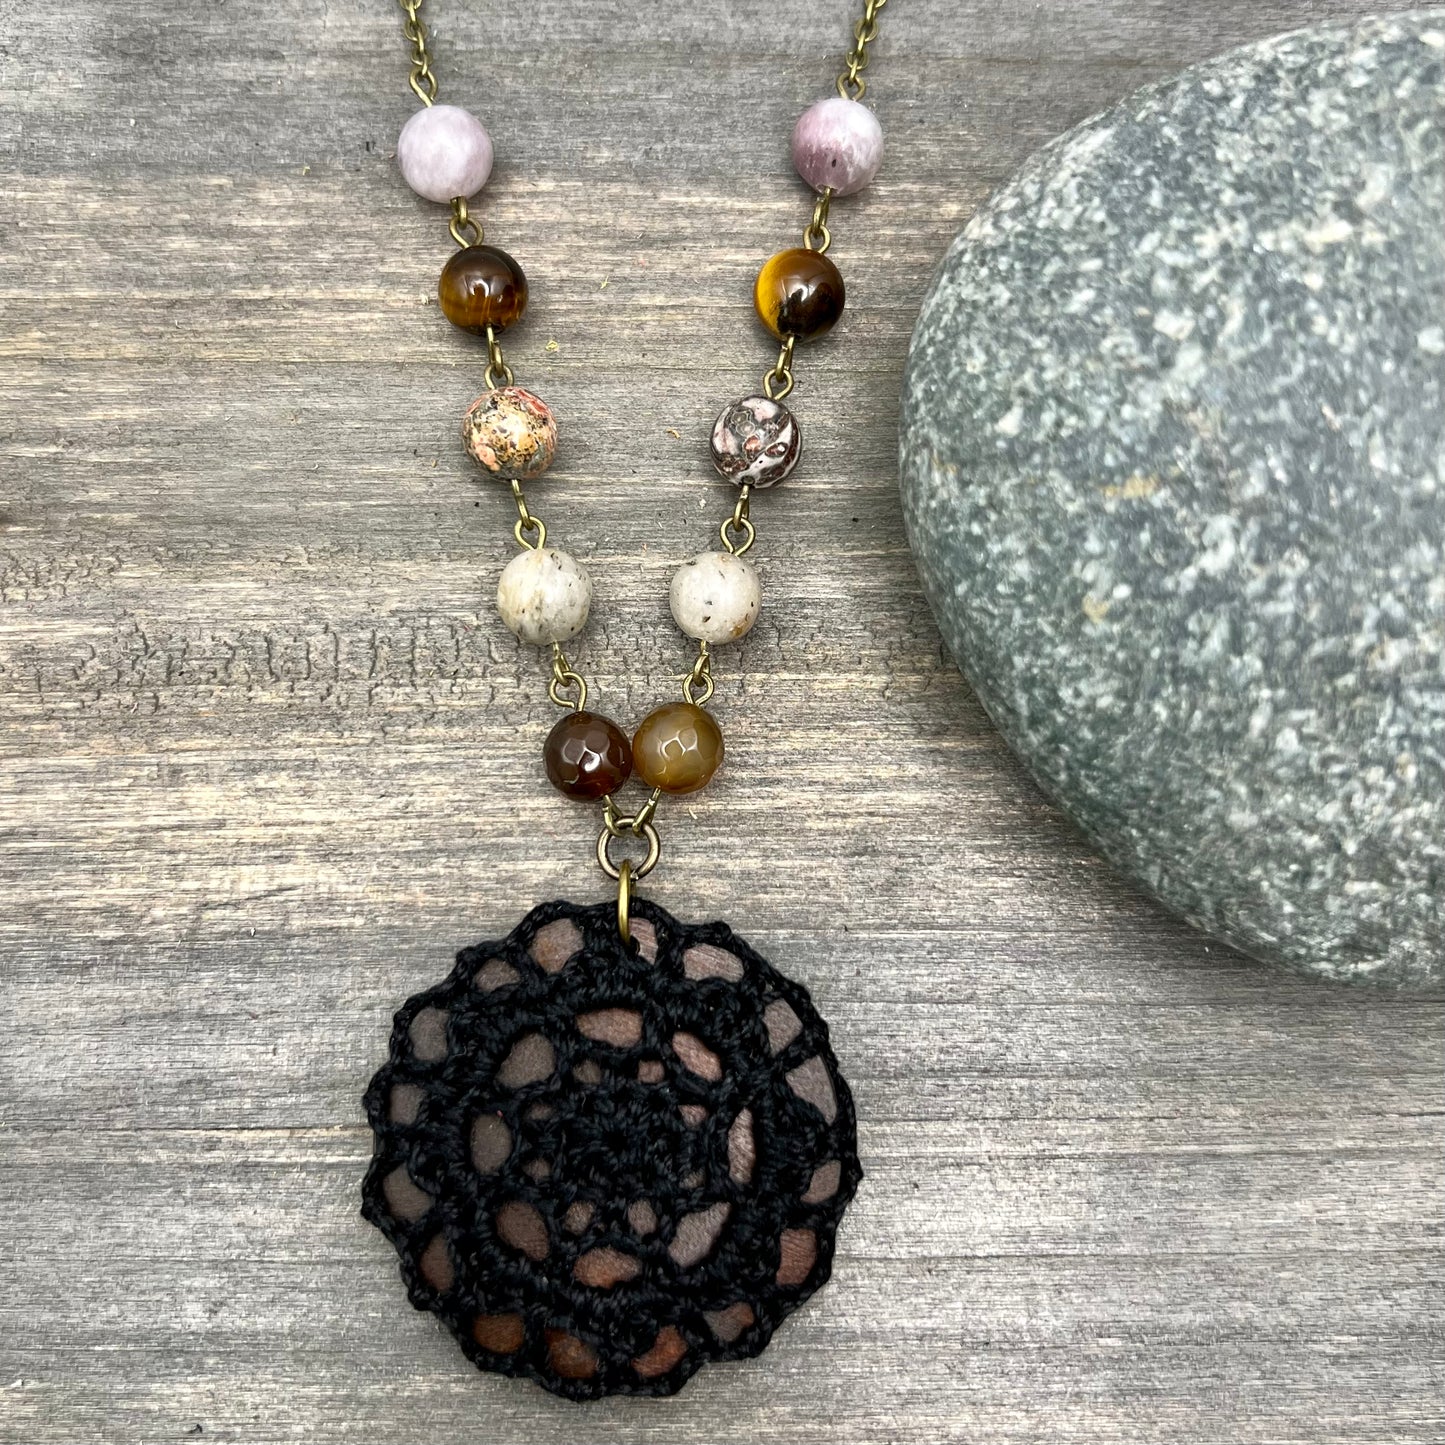 Boho Crochet Pendant Statement Necklace -  Small Mandala Pendant in Black